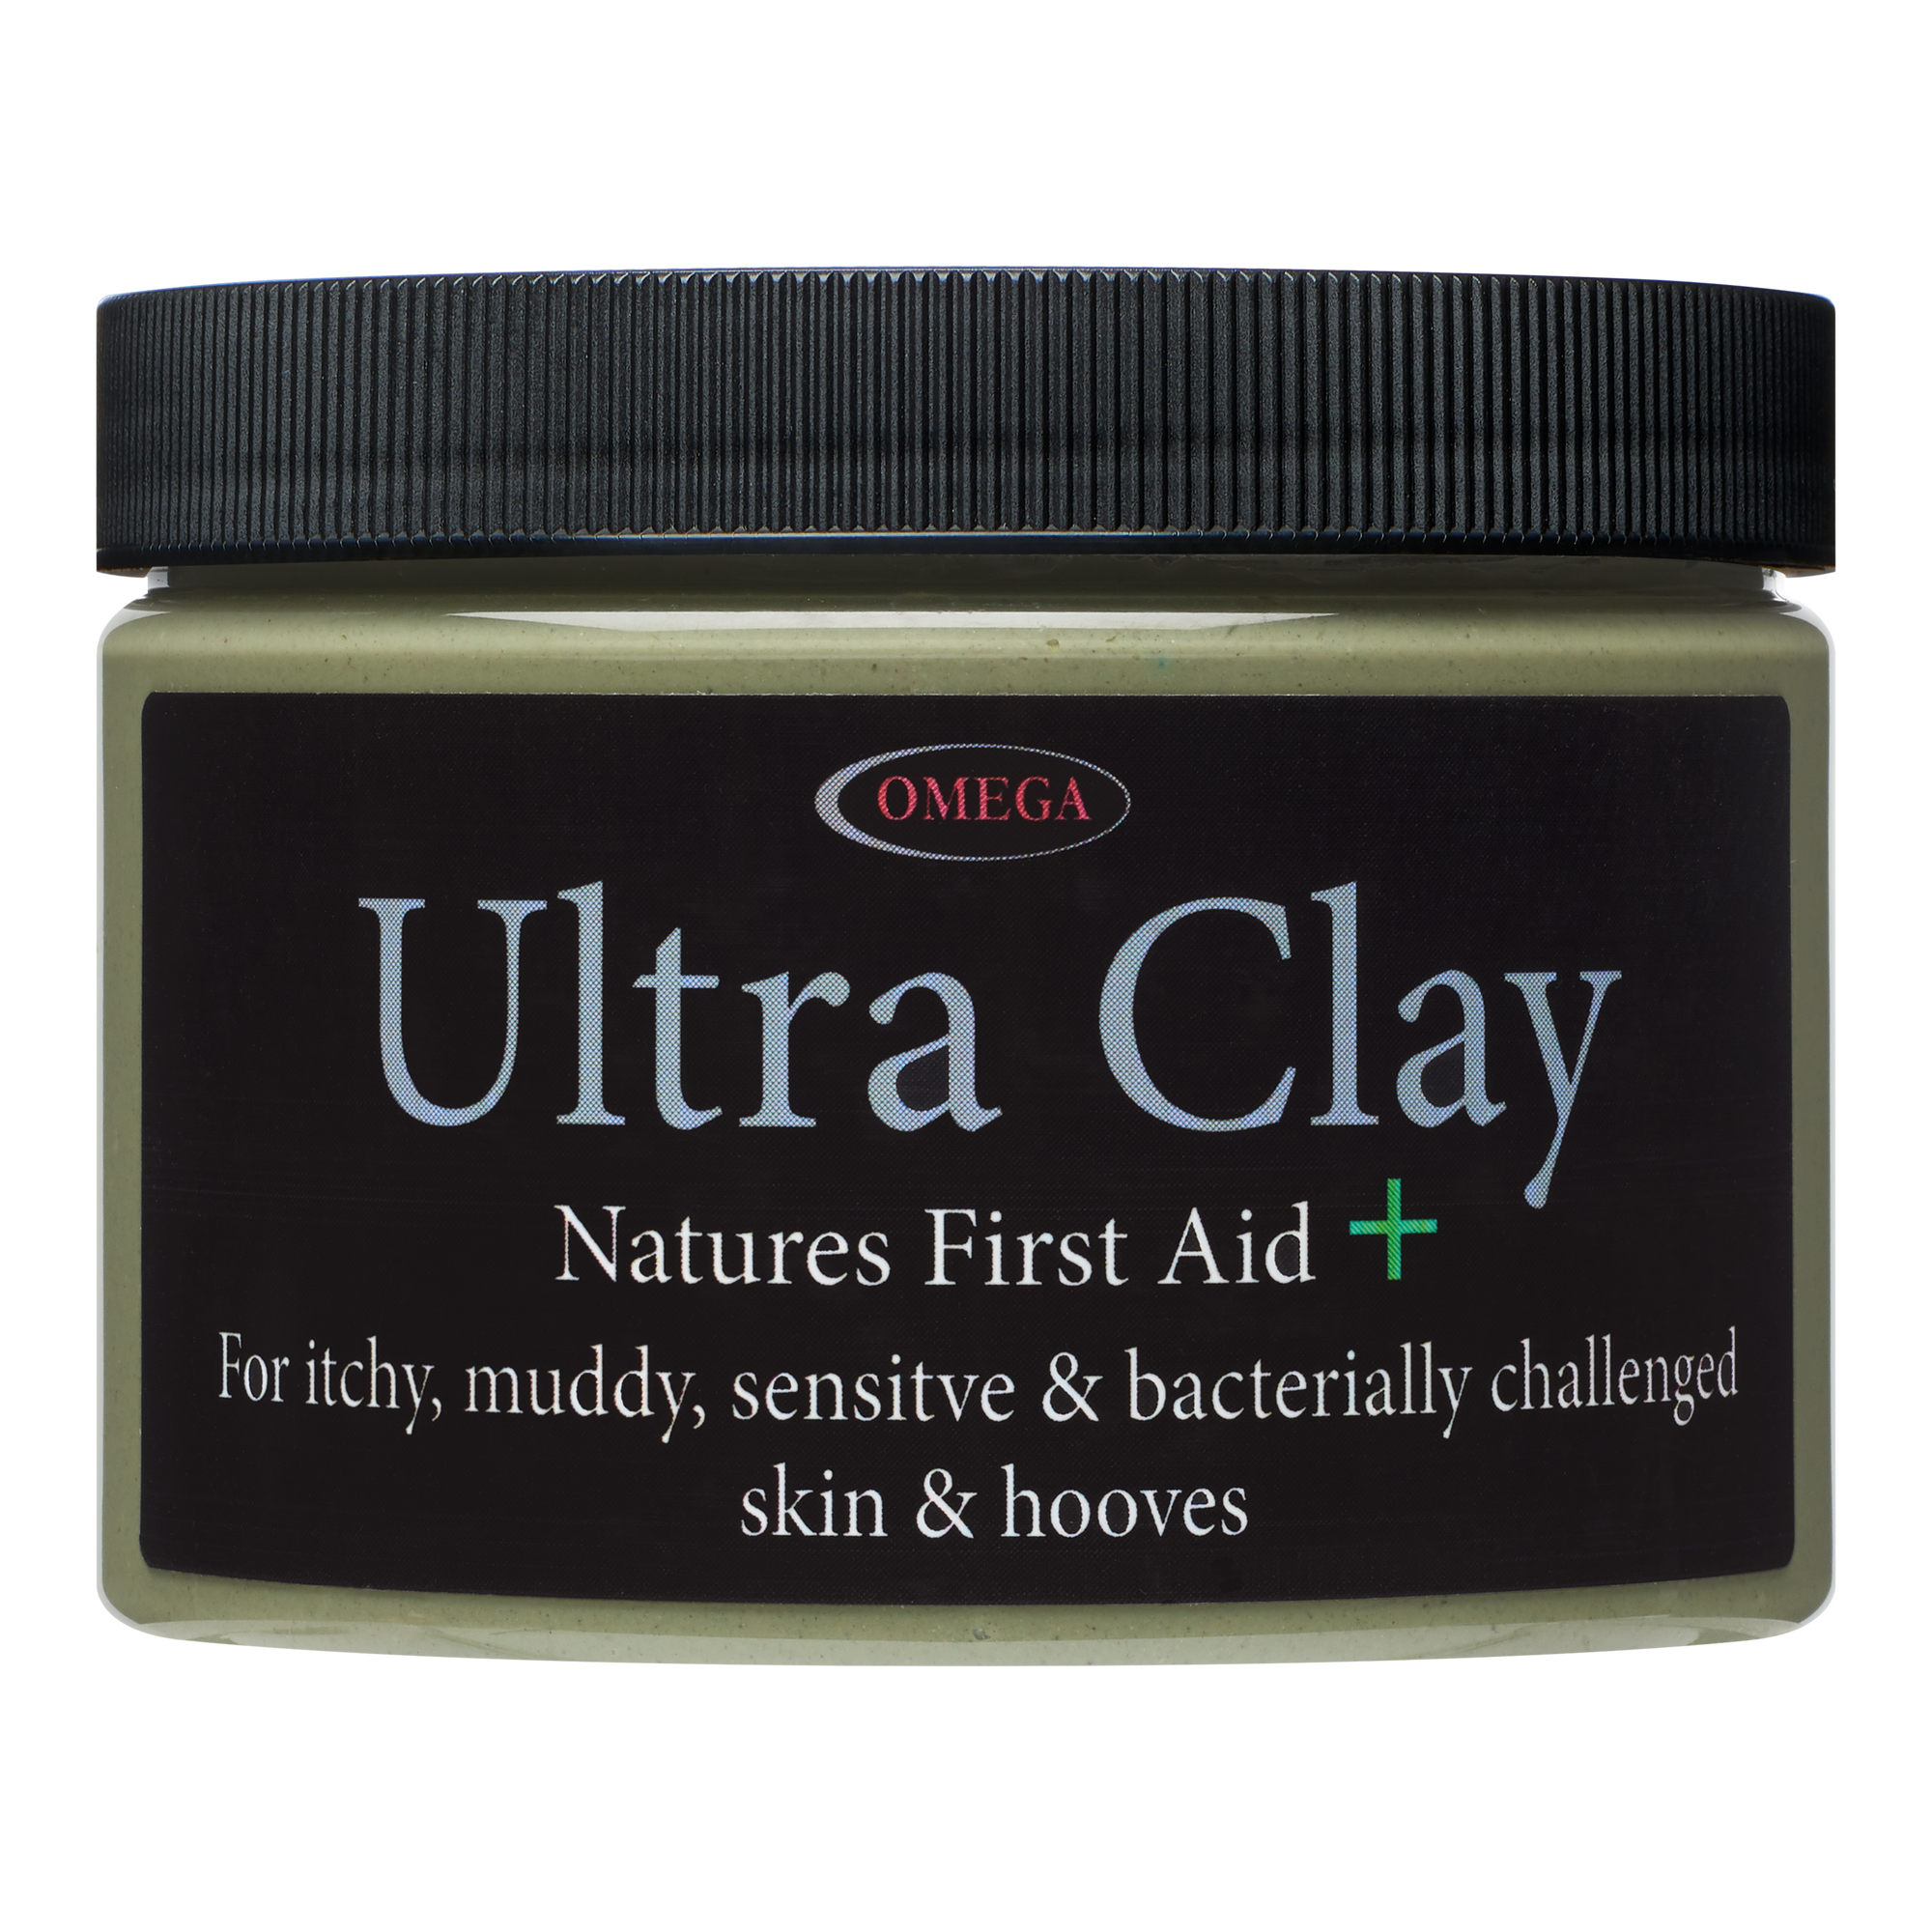 Omega Ultra Clay